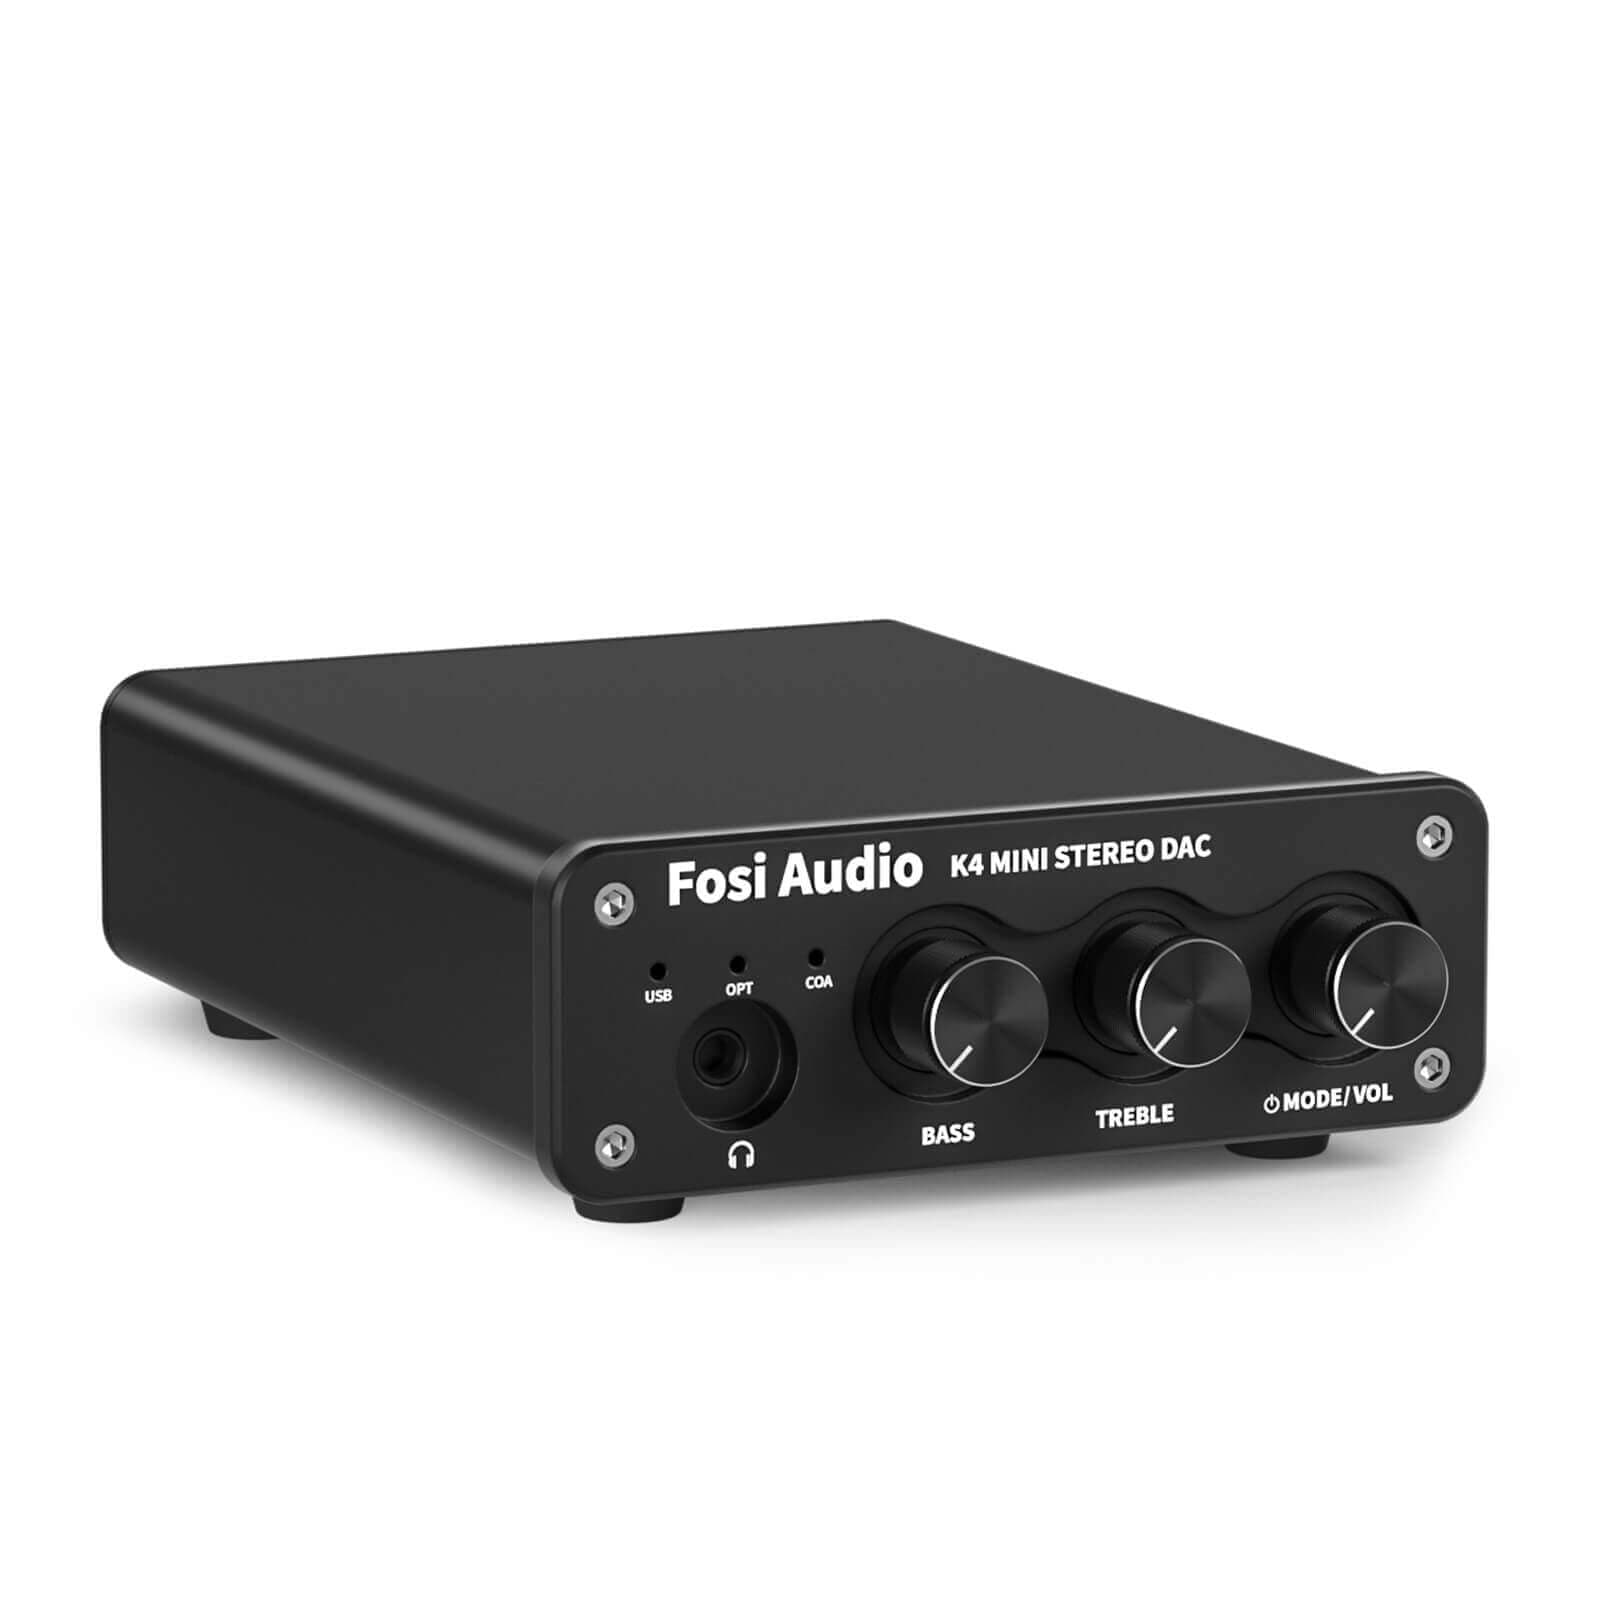 Fosi Audio K4 DAC Headphone Amp